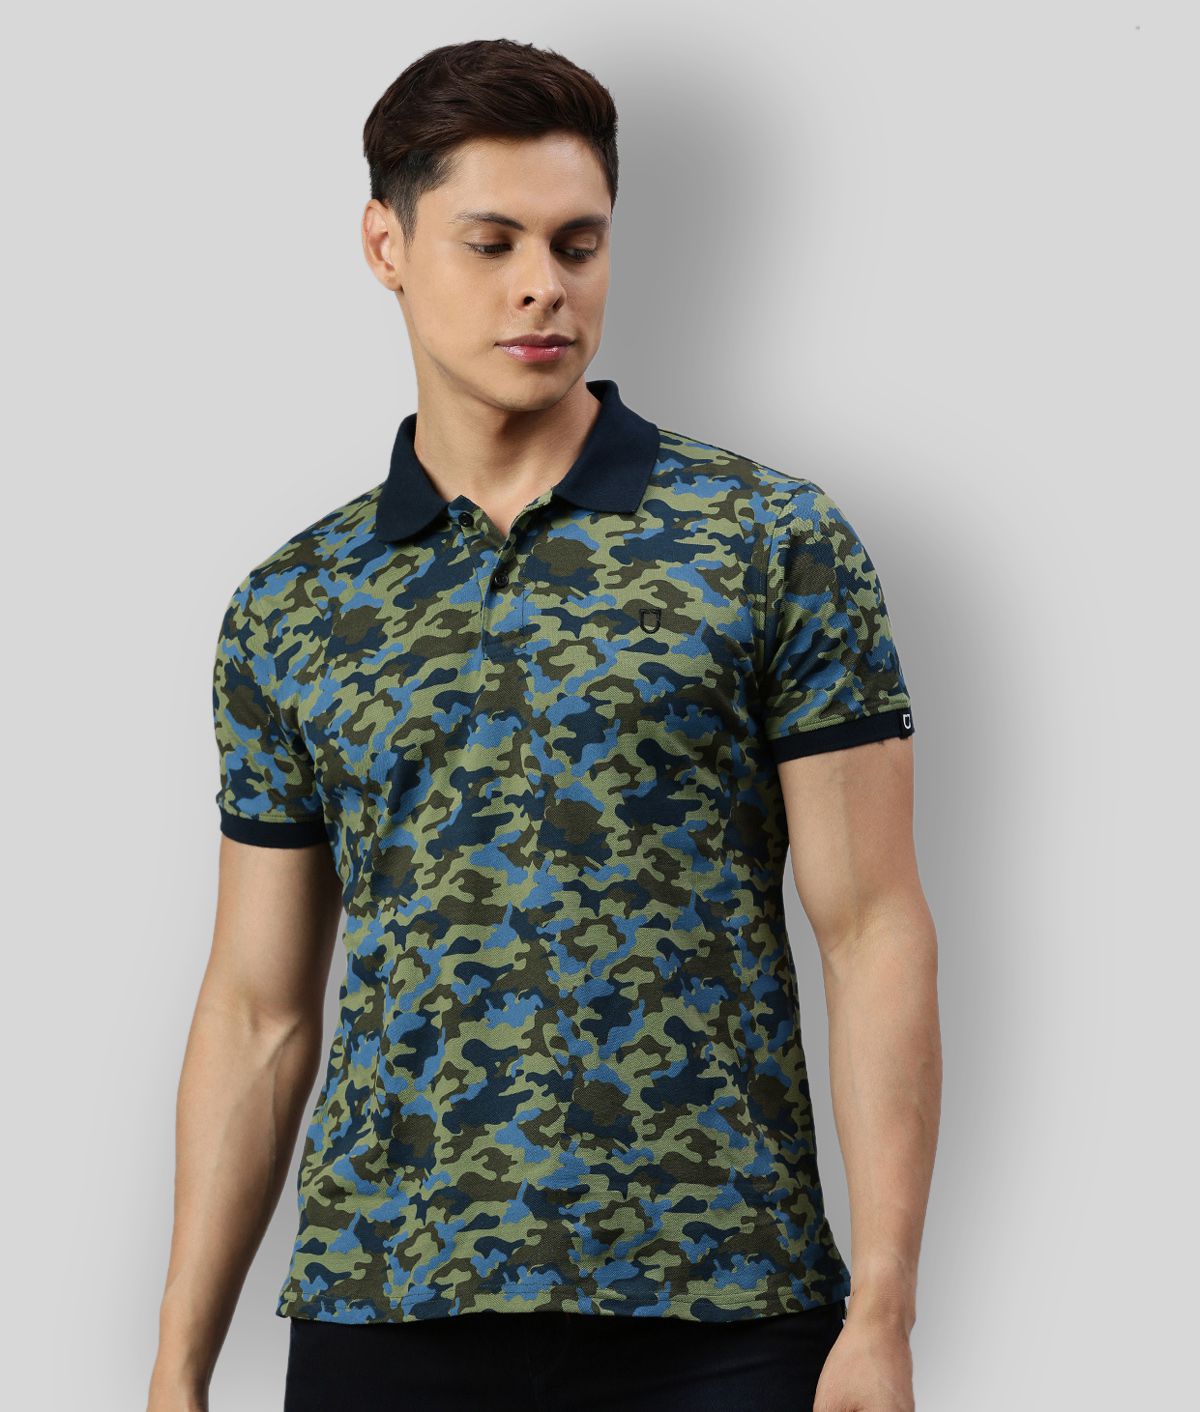     			Urbano Fashion - Multicolor Cotton Slim Fit Men's T-Shirt ( Pack of 1 )